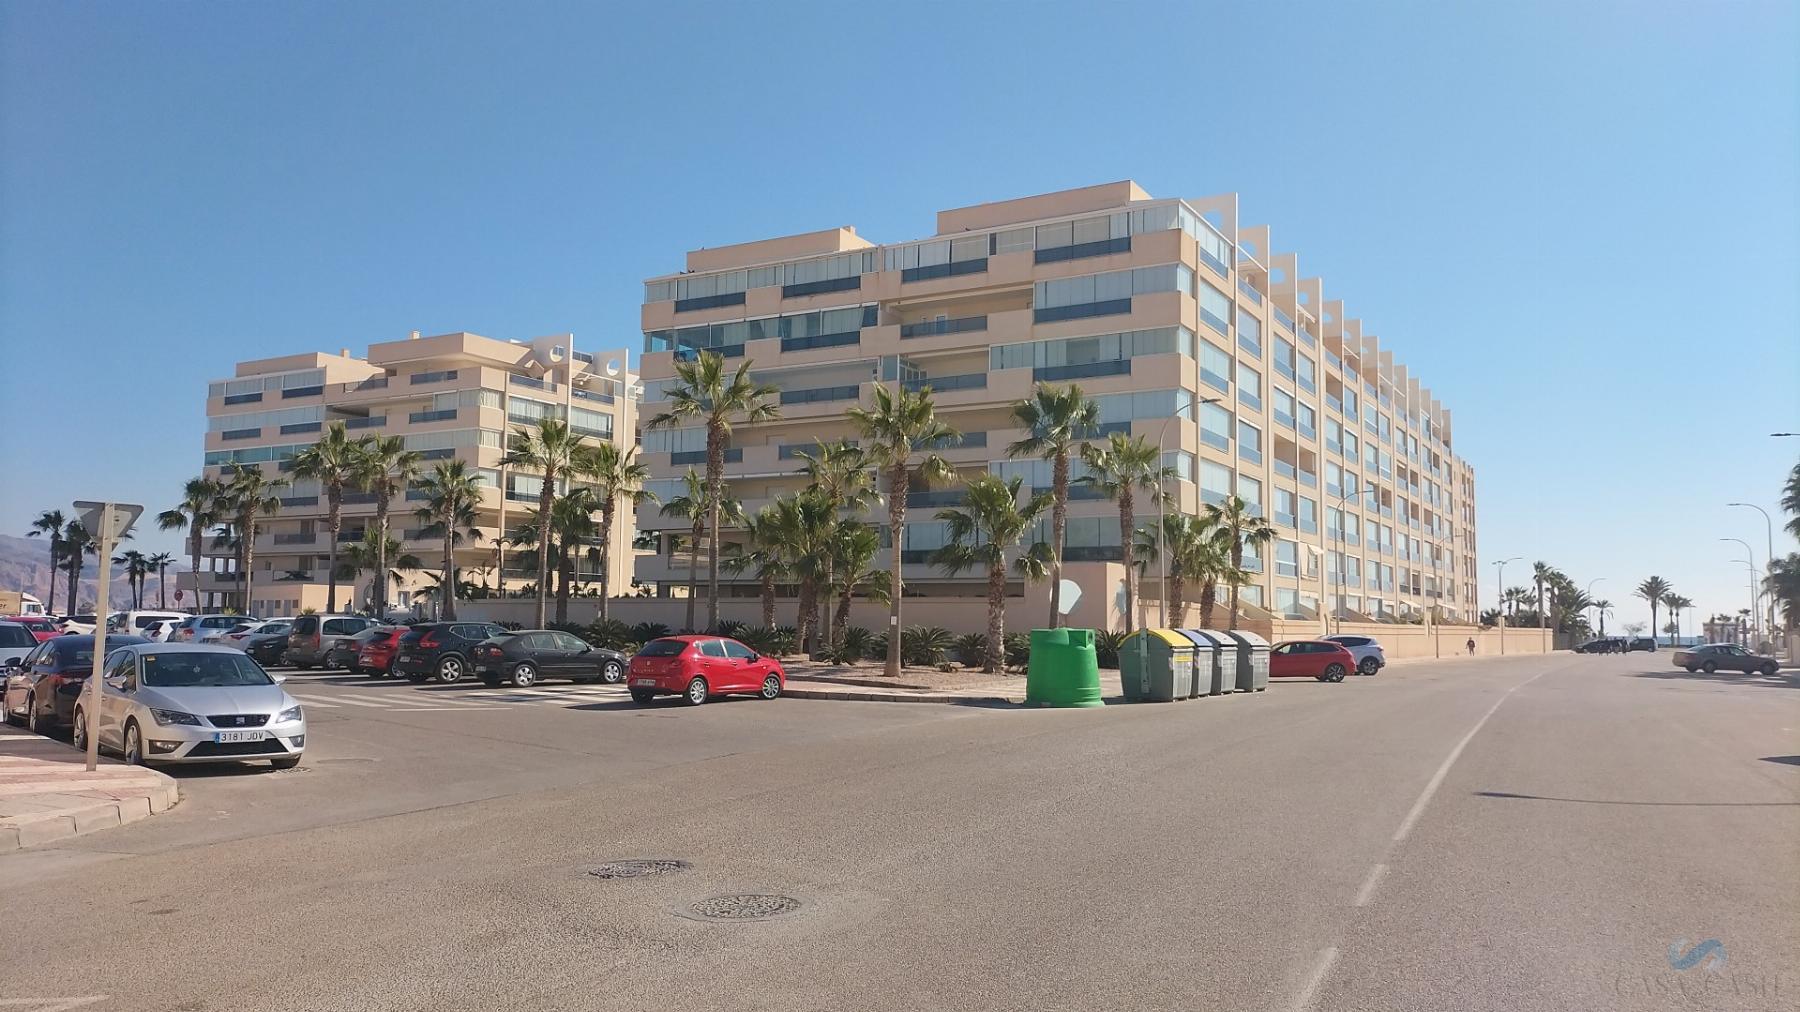 Salg av leilighet i Roquetas de Mar